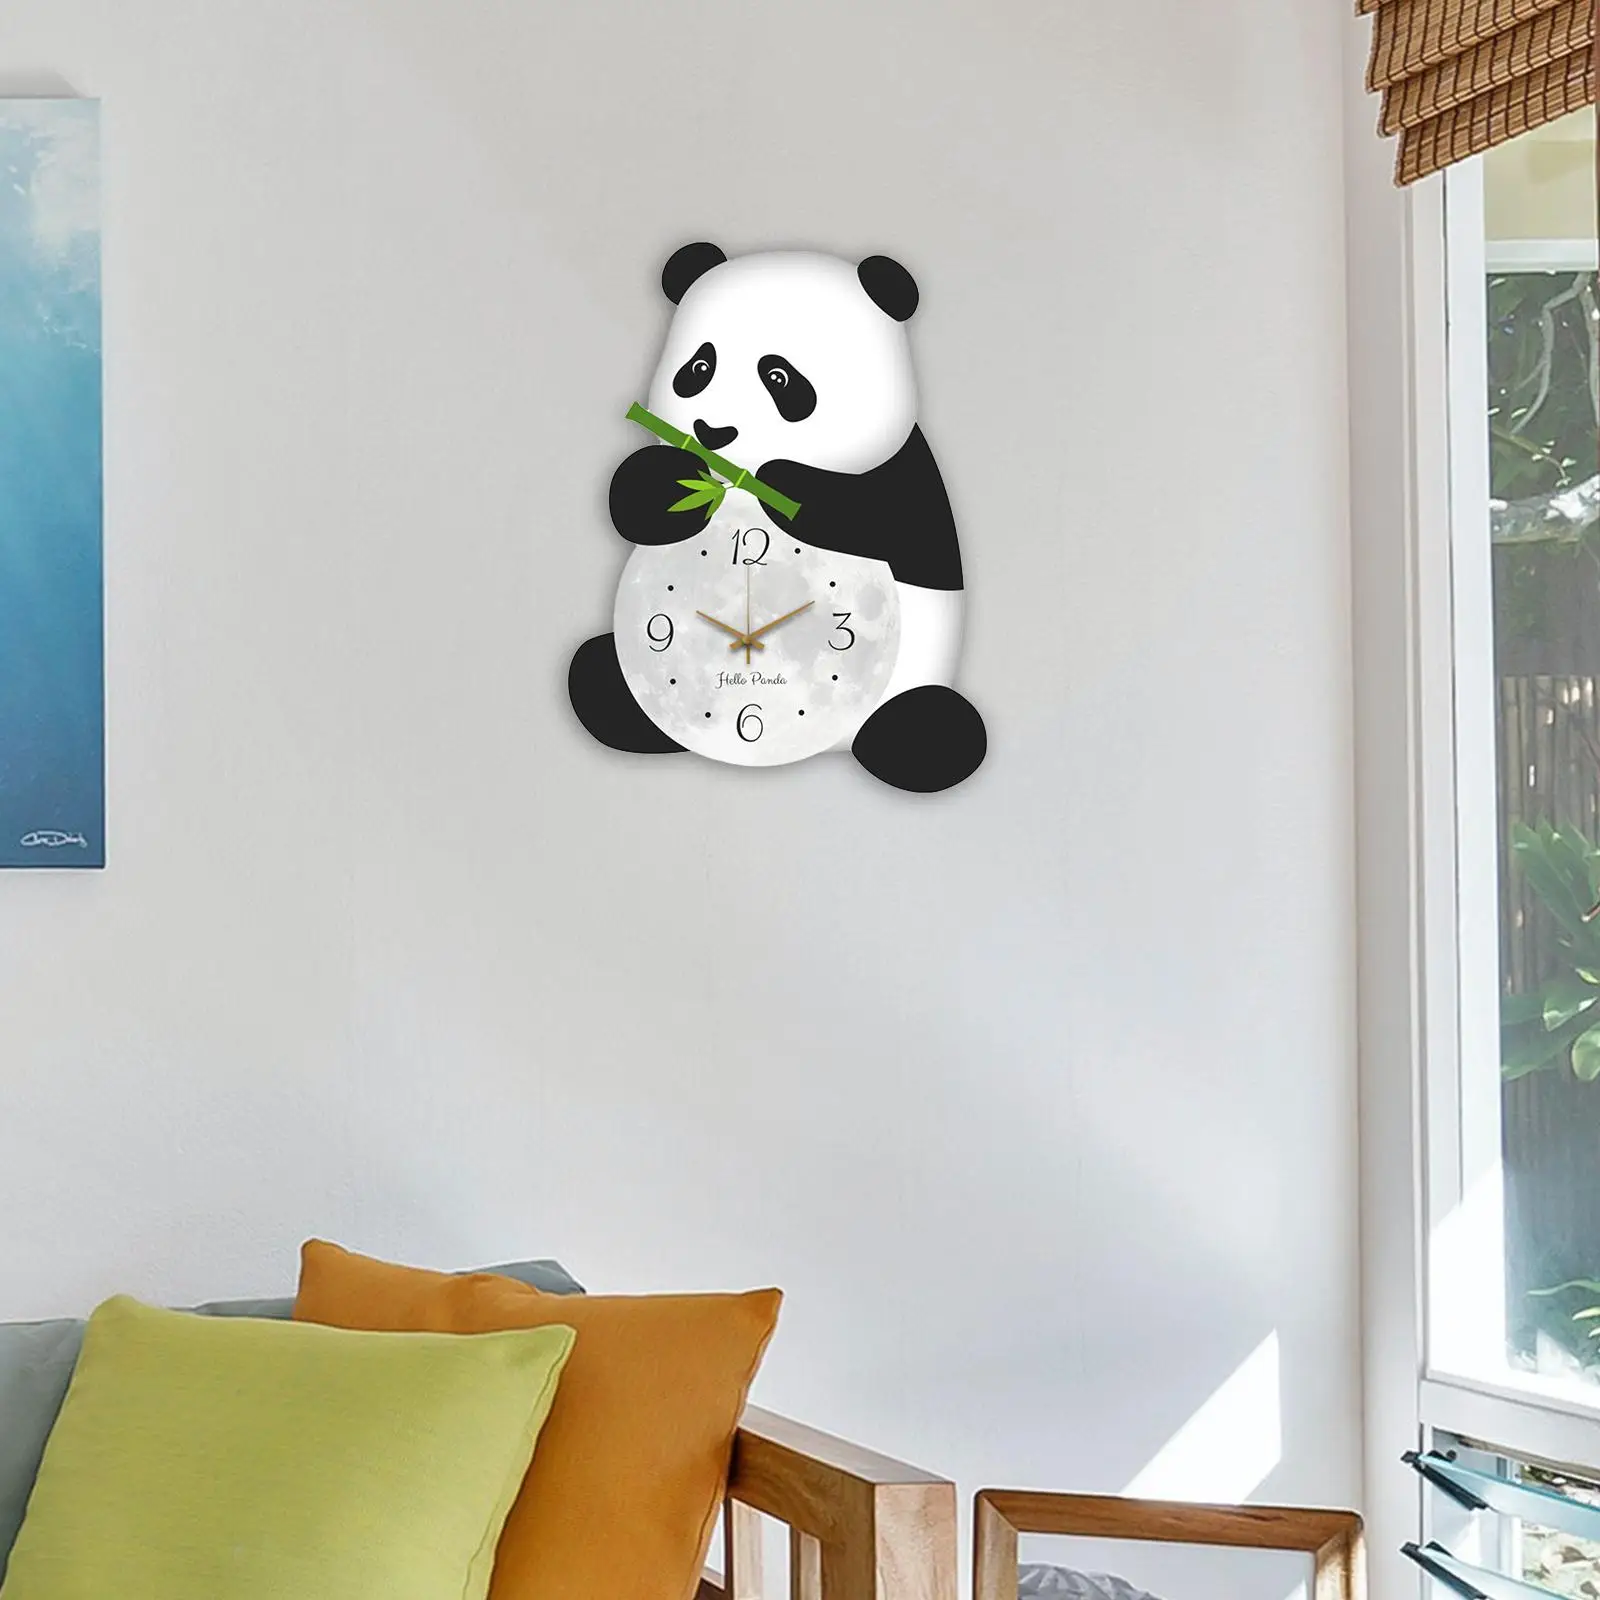 Panda Wall Clock Silent Small Wooden Creative Decorative Clock Wall Hanging Clock Animal Wall Ornament for Kitchen Home Decor